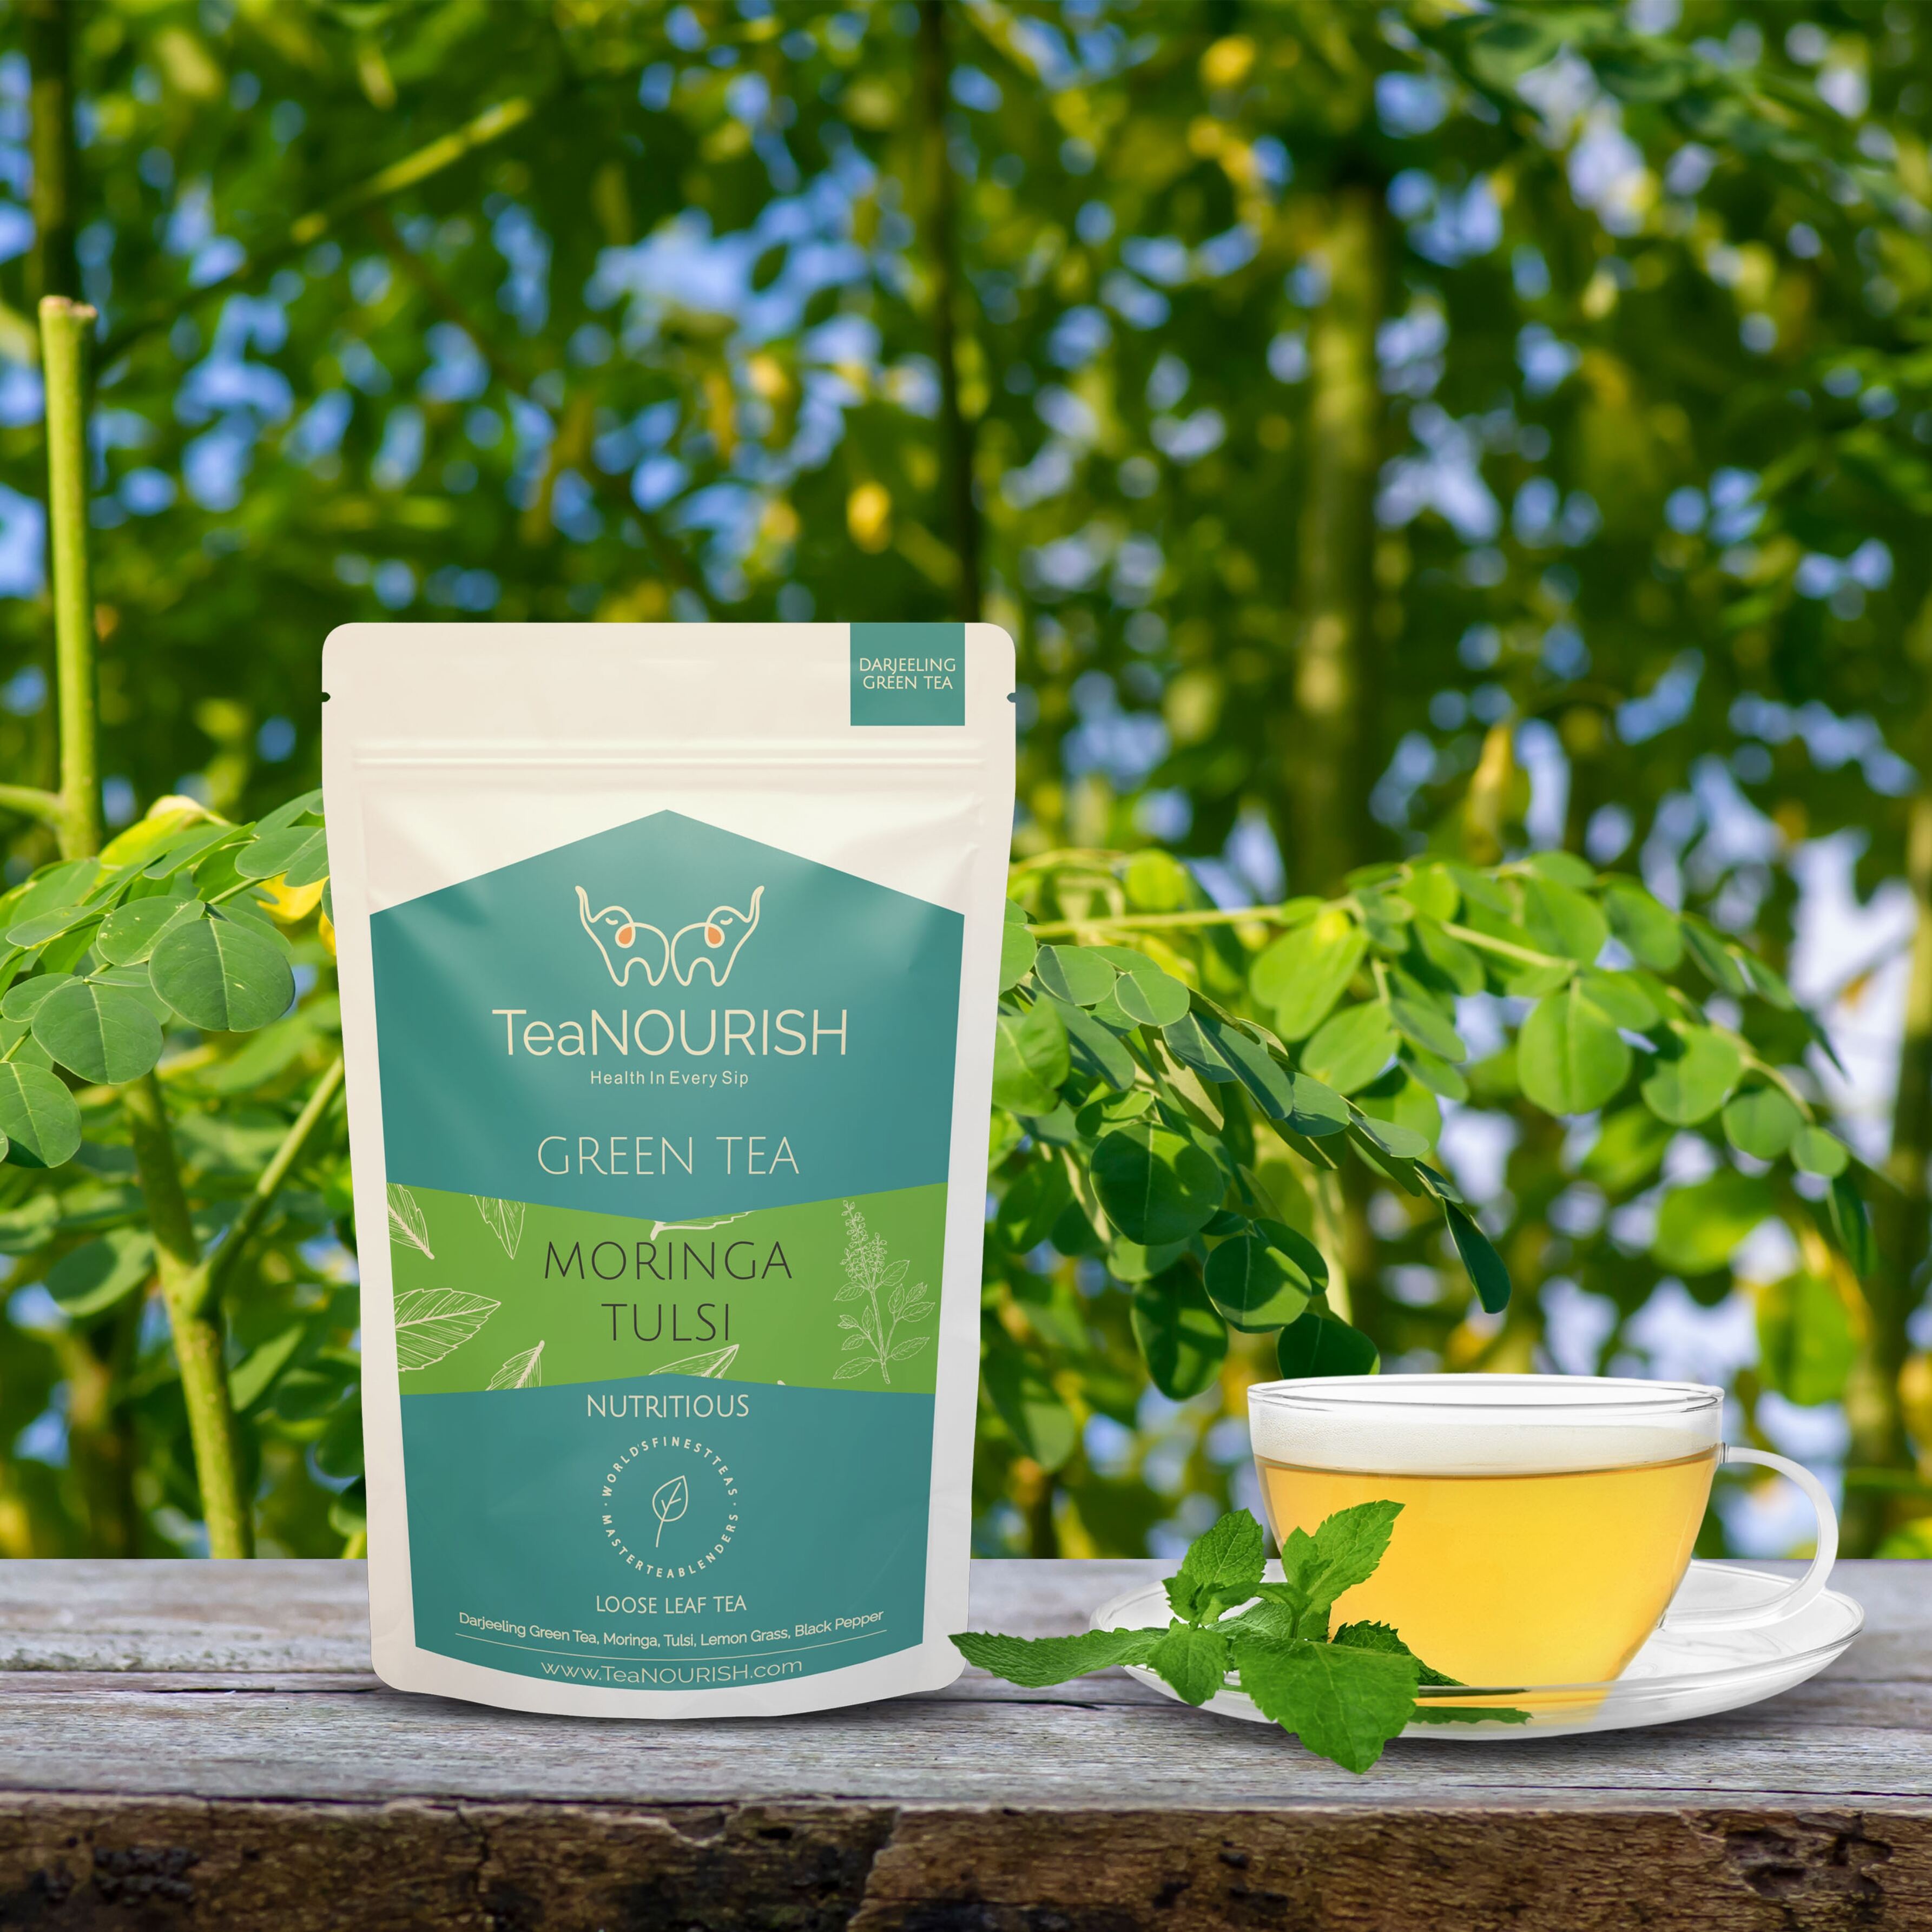 Moringa Tulsi Green Tea Product Picture